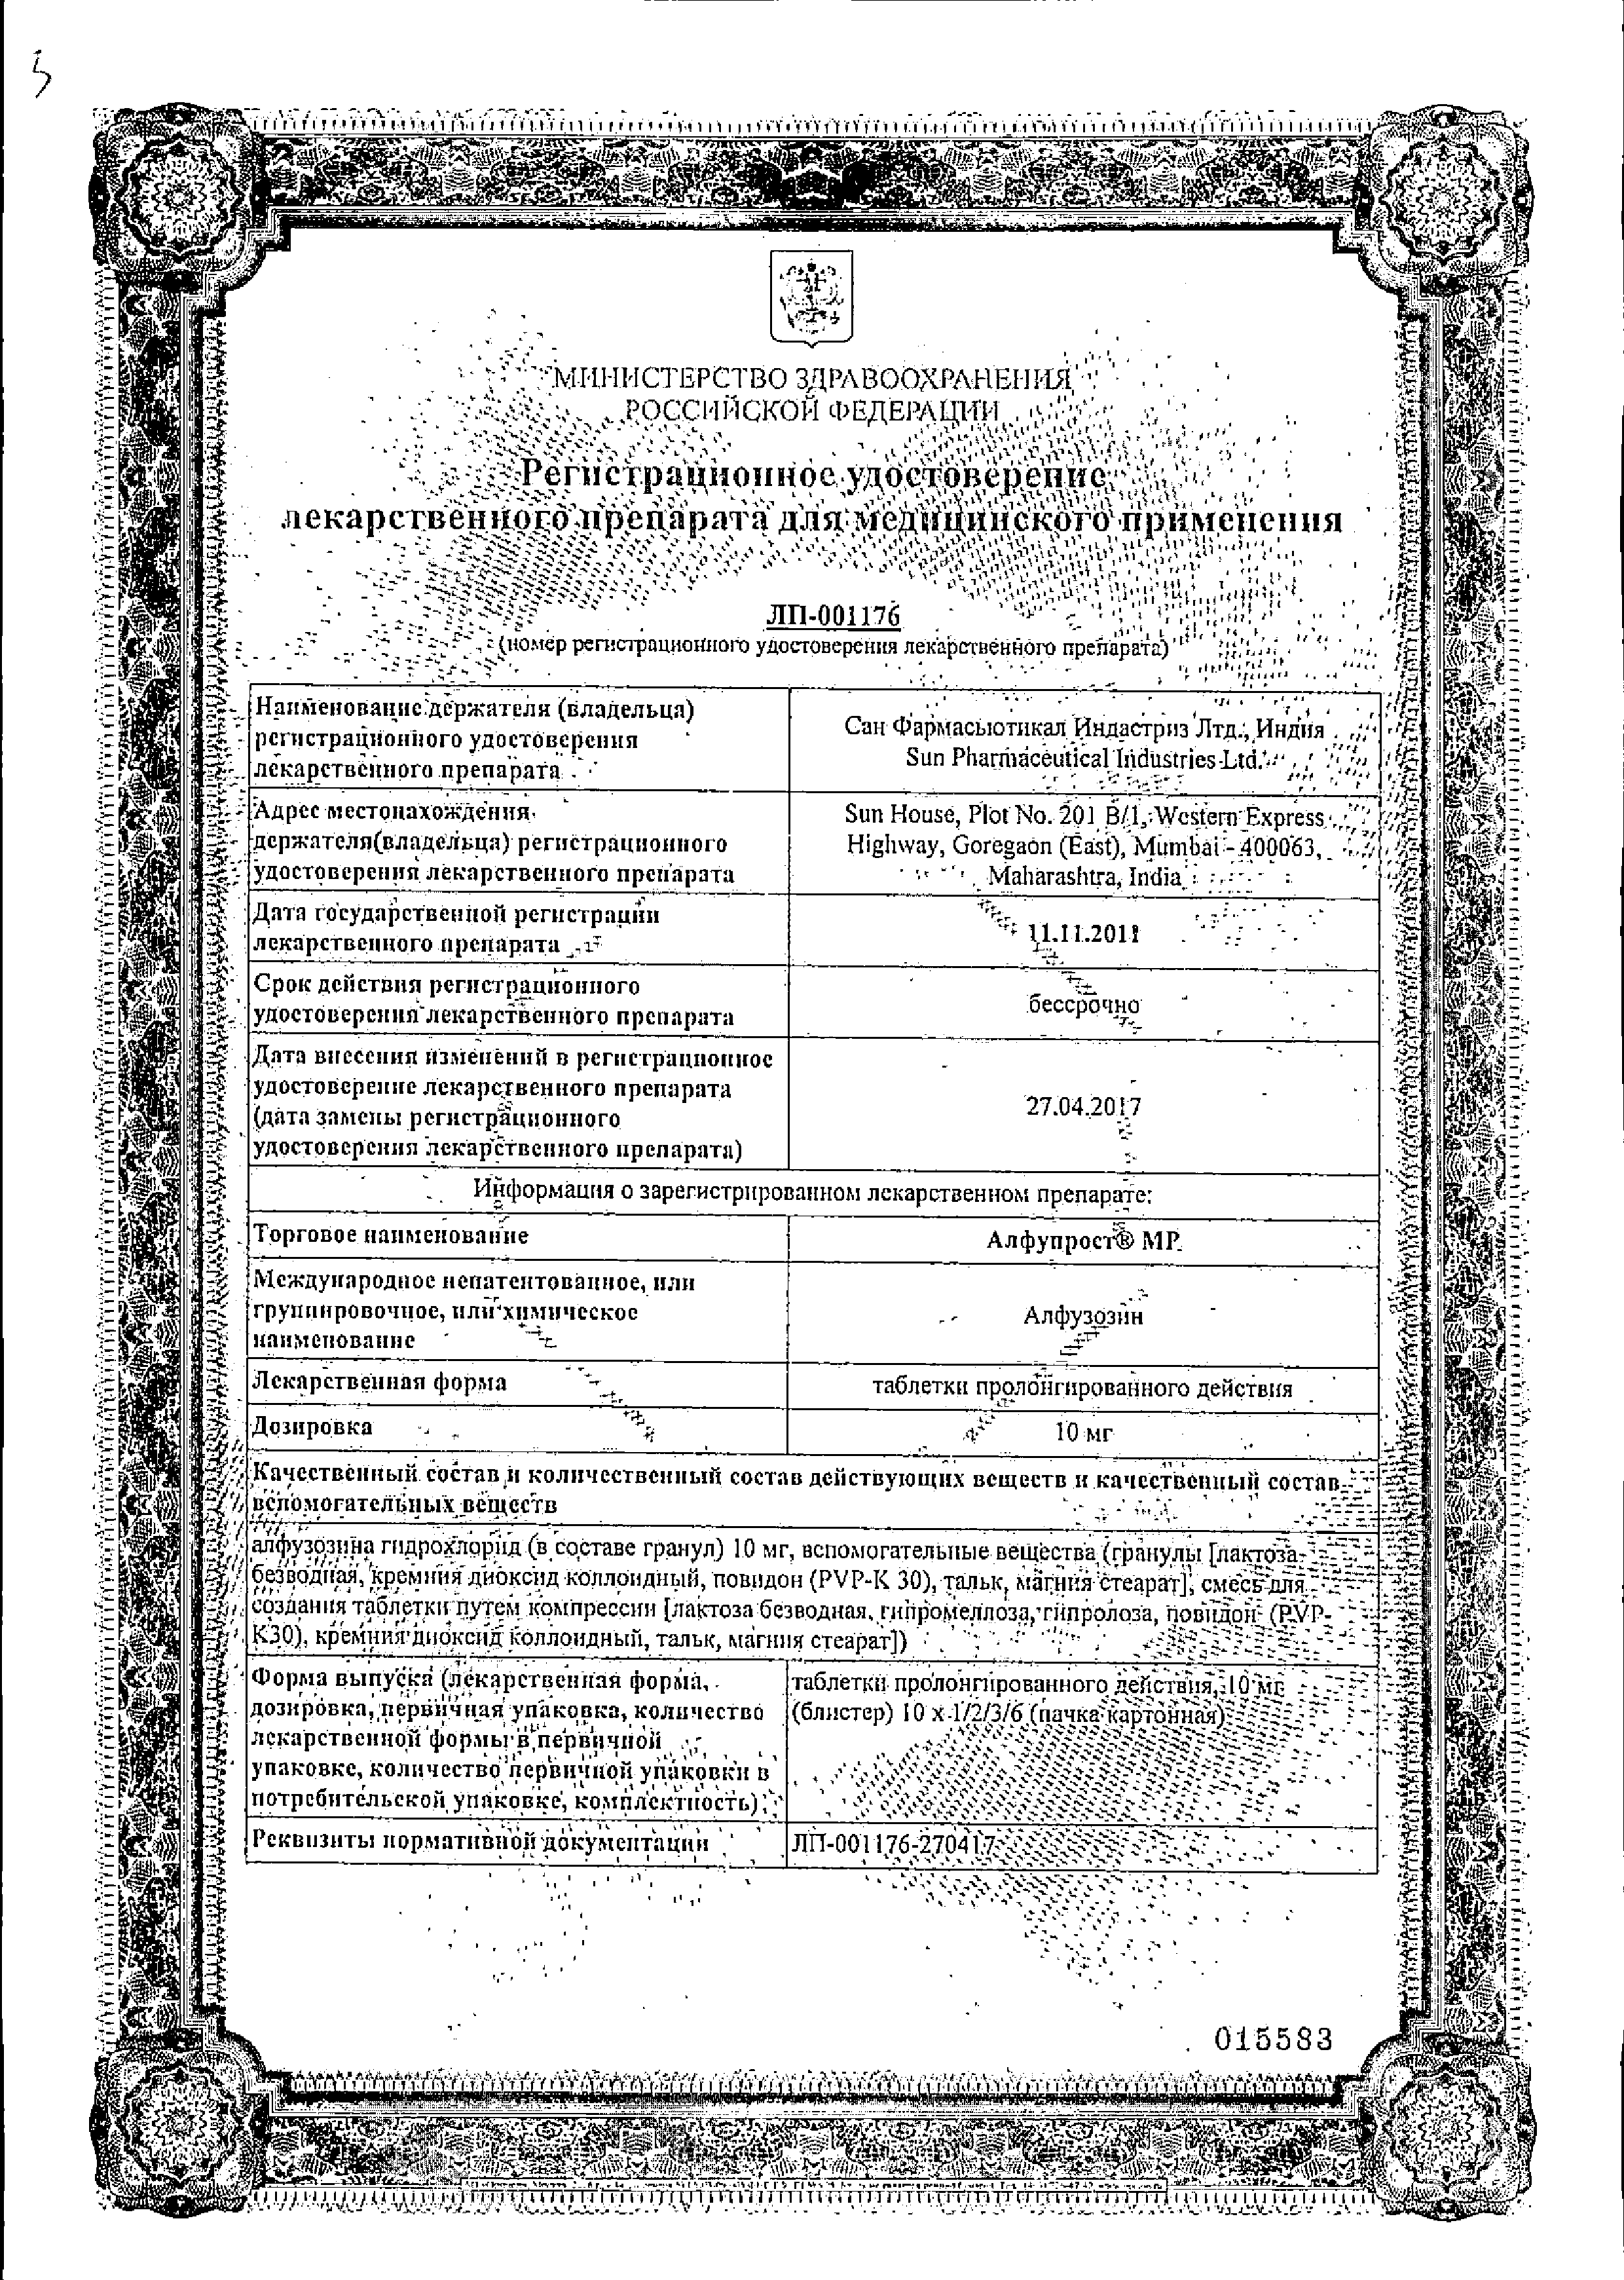 Алфупрост МР сертификат